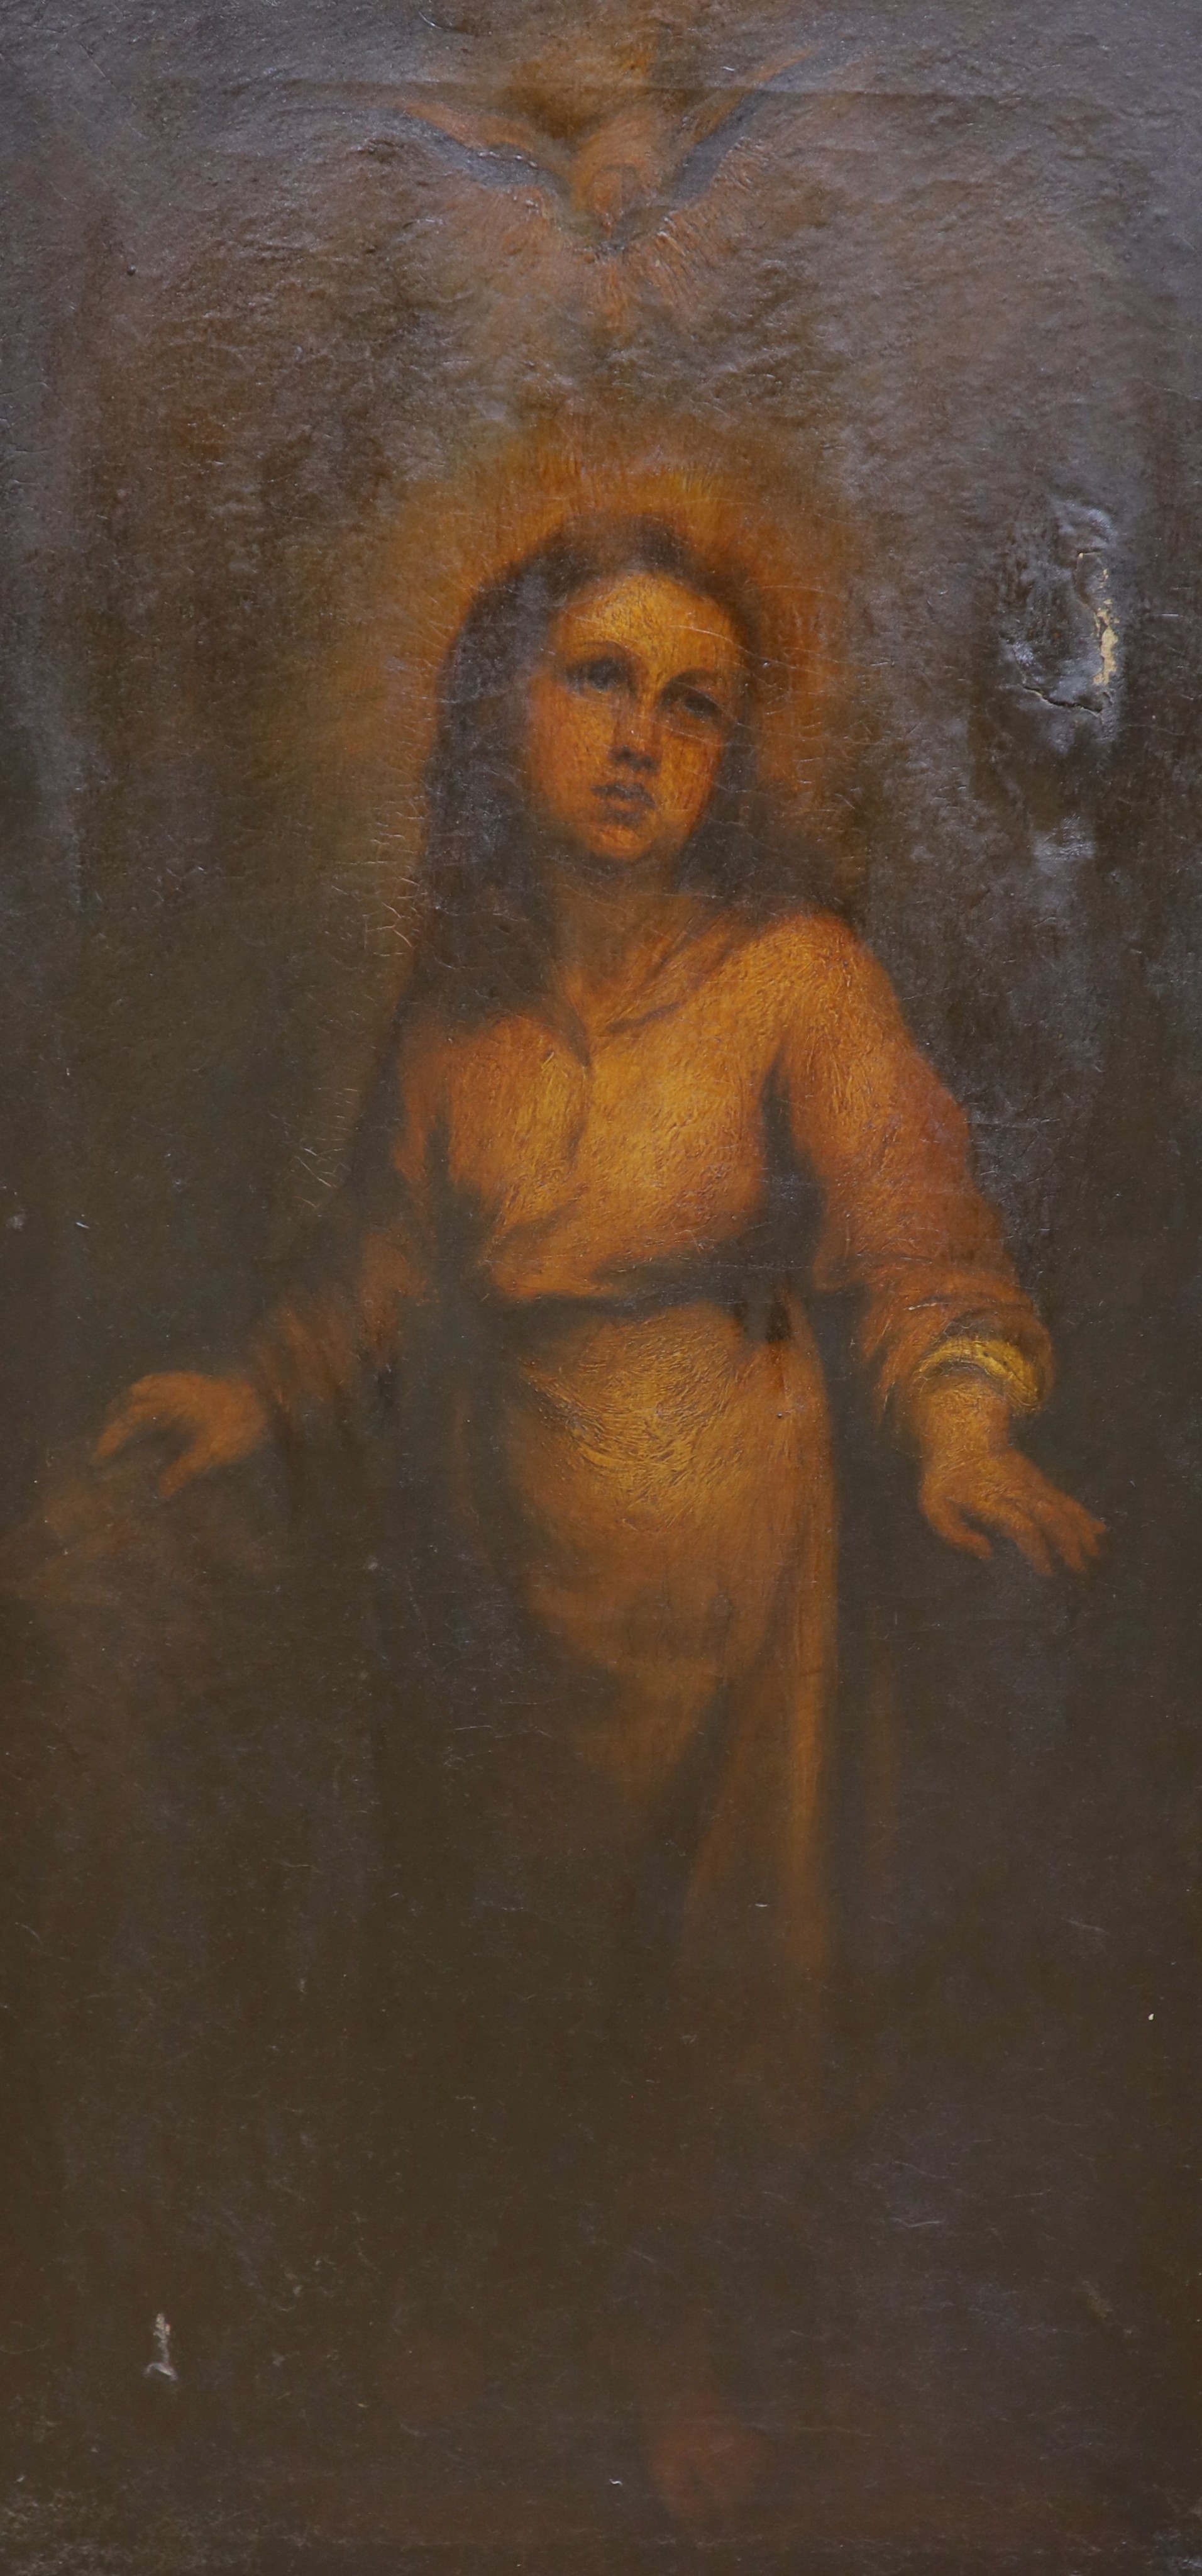 19th century English school, oil on canvas, The Annunciation, 112 x 56 cm, unframed.